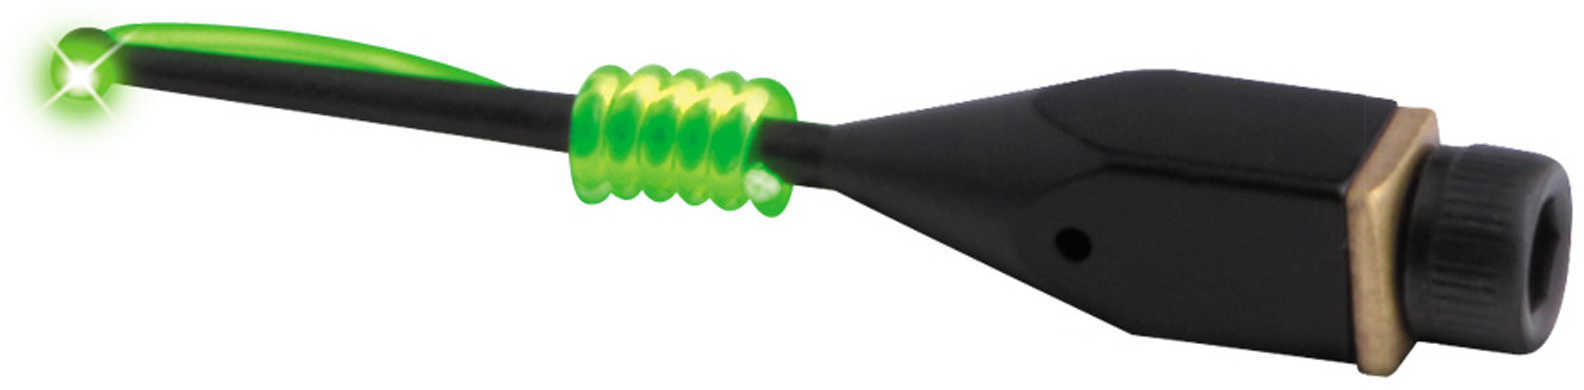 Truglo Pro-Wrap Pin .019 Green TG844WG